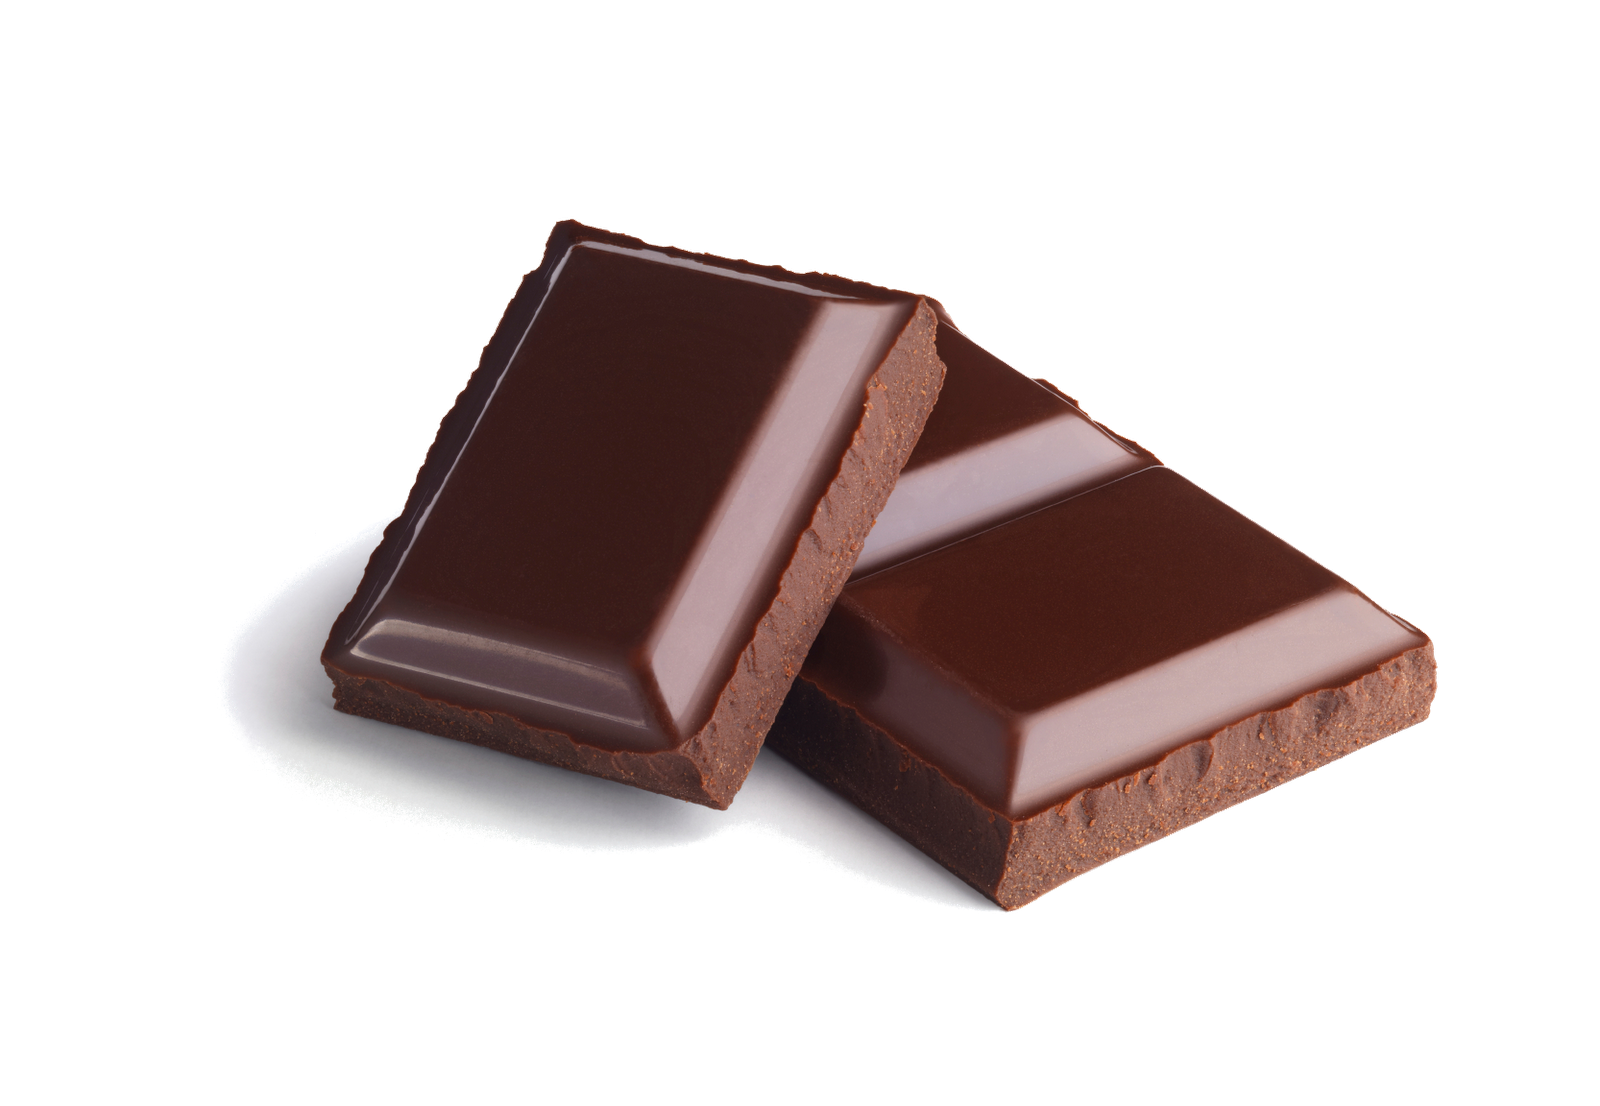 Chocolate Bar PNG High-Quality Image